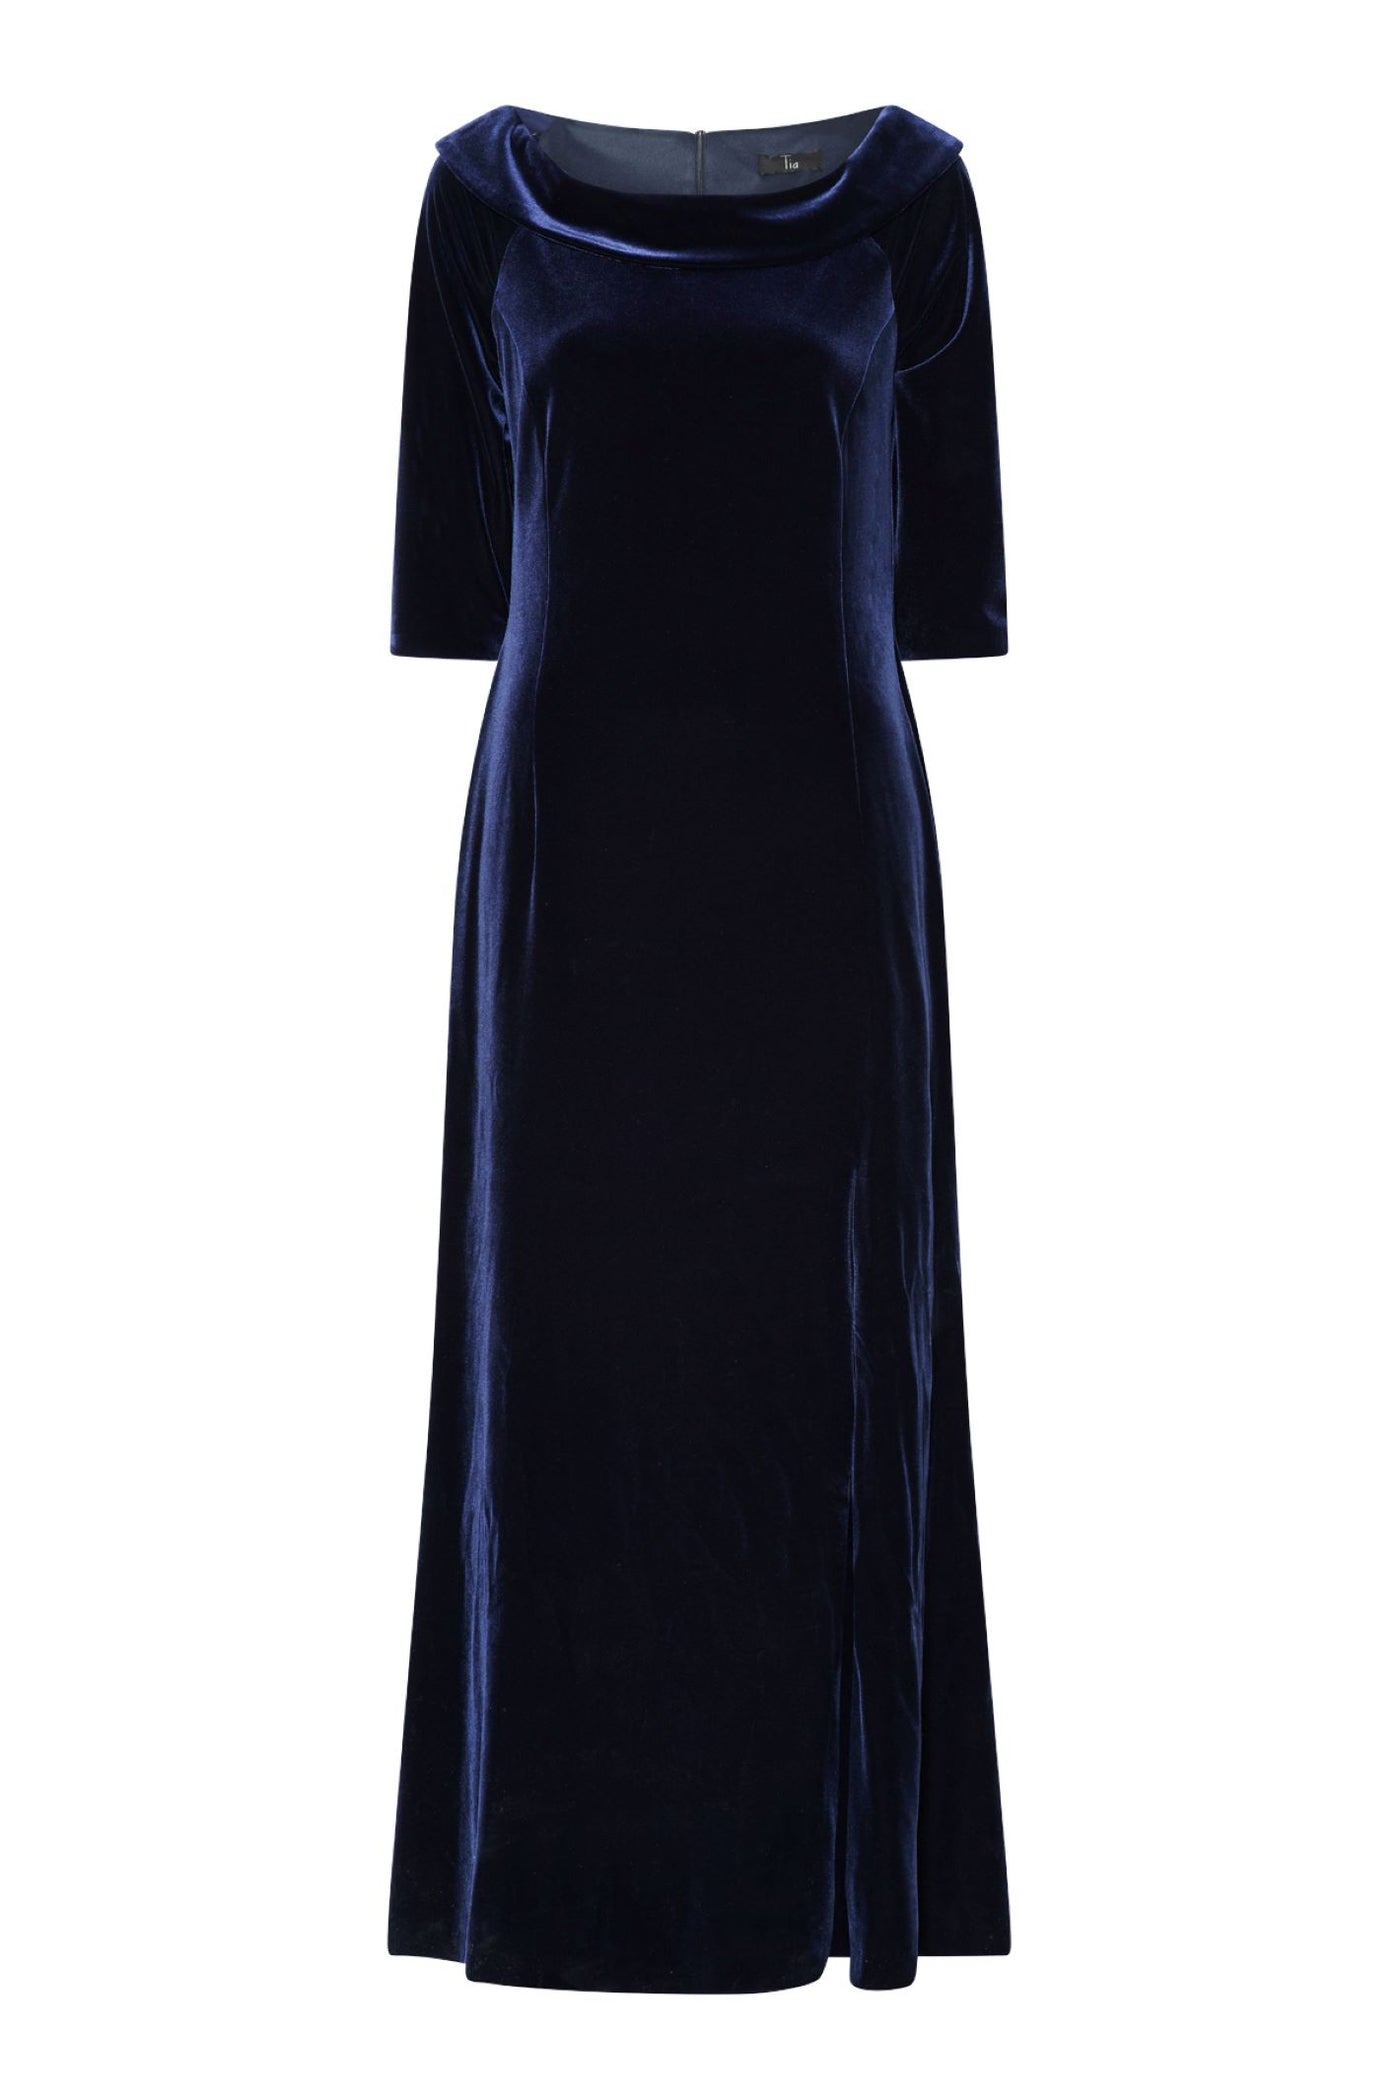 Tia 78735 Midnight Blue Long, Sleeved, Wide Neck Evening Dress in Velvet